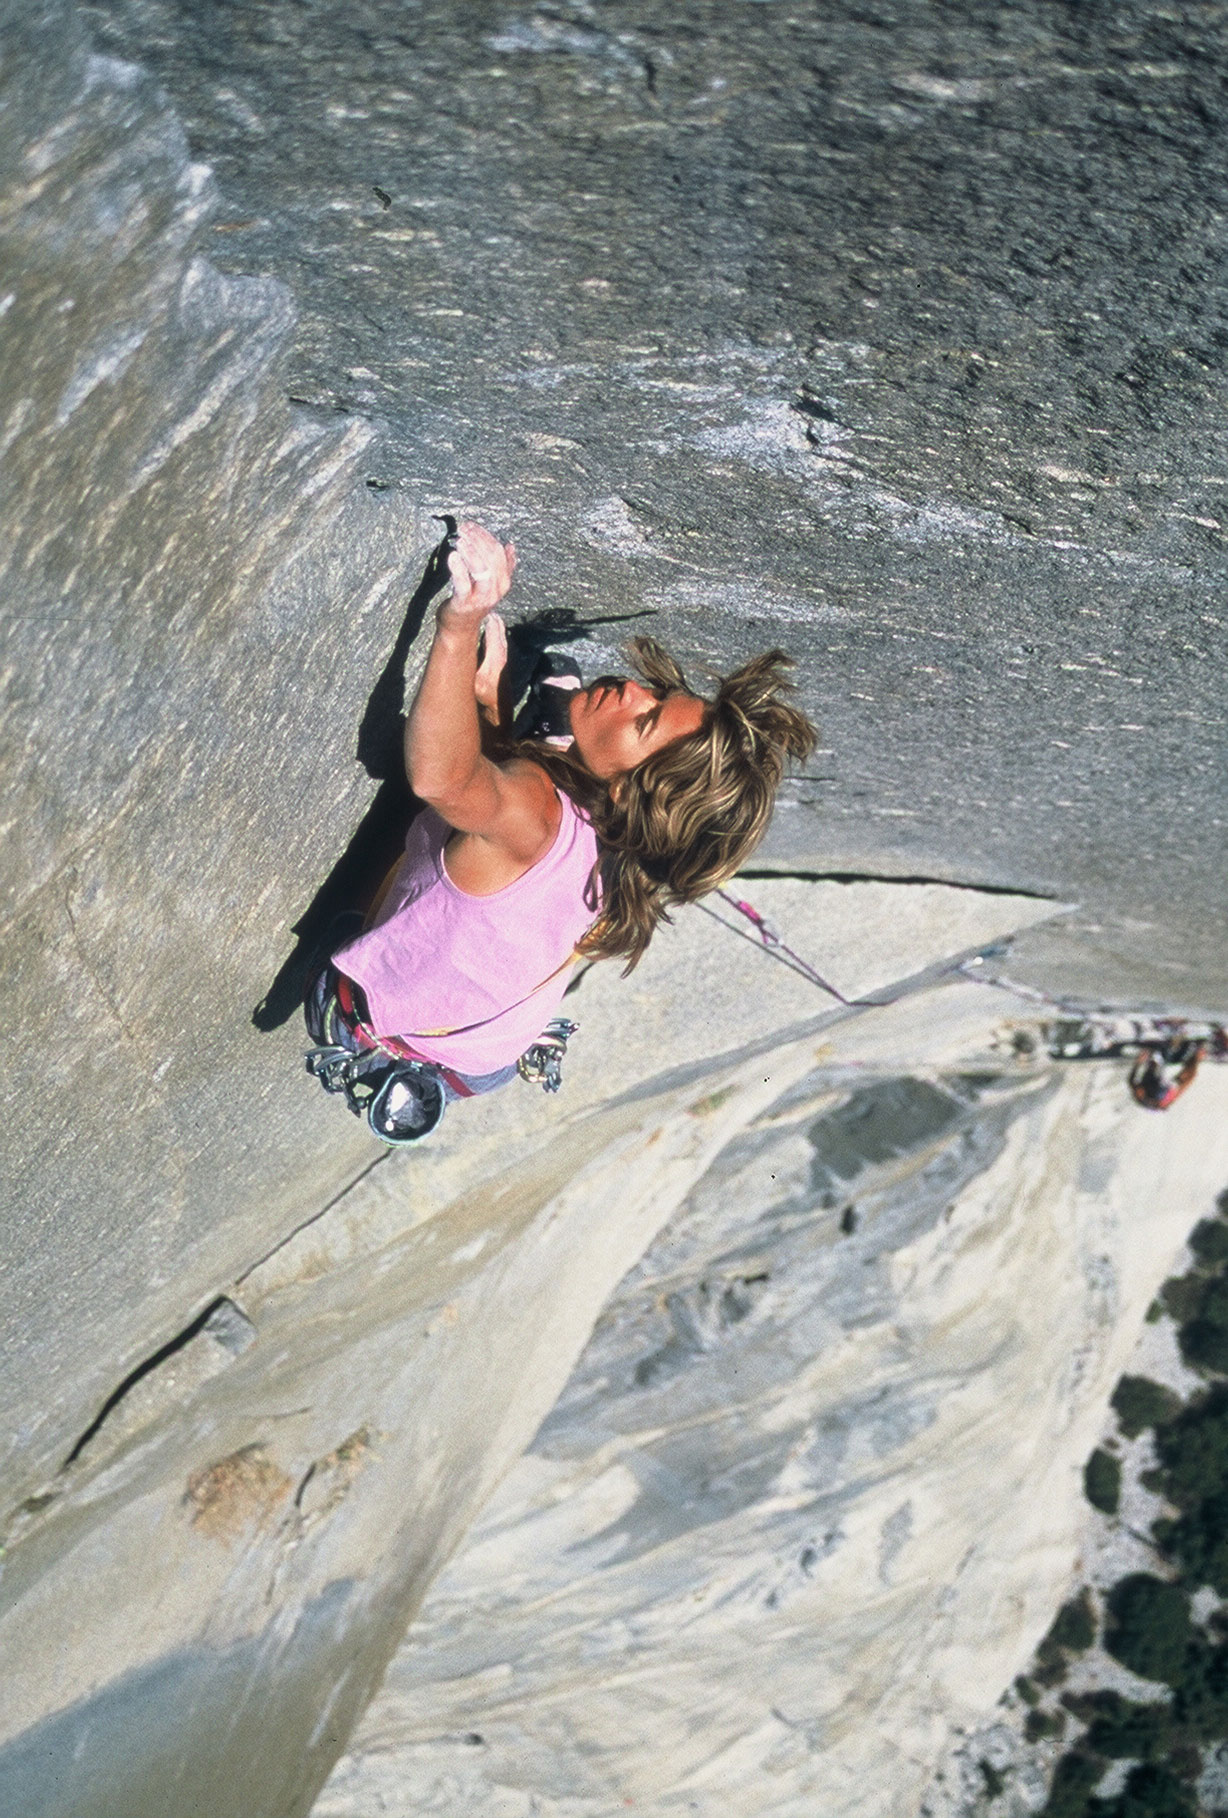 1988-1993: “Freeing” El Cap